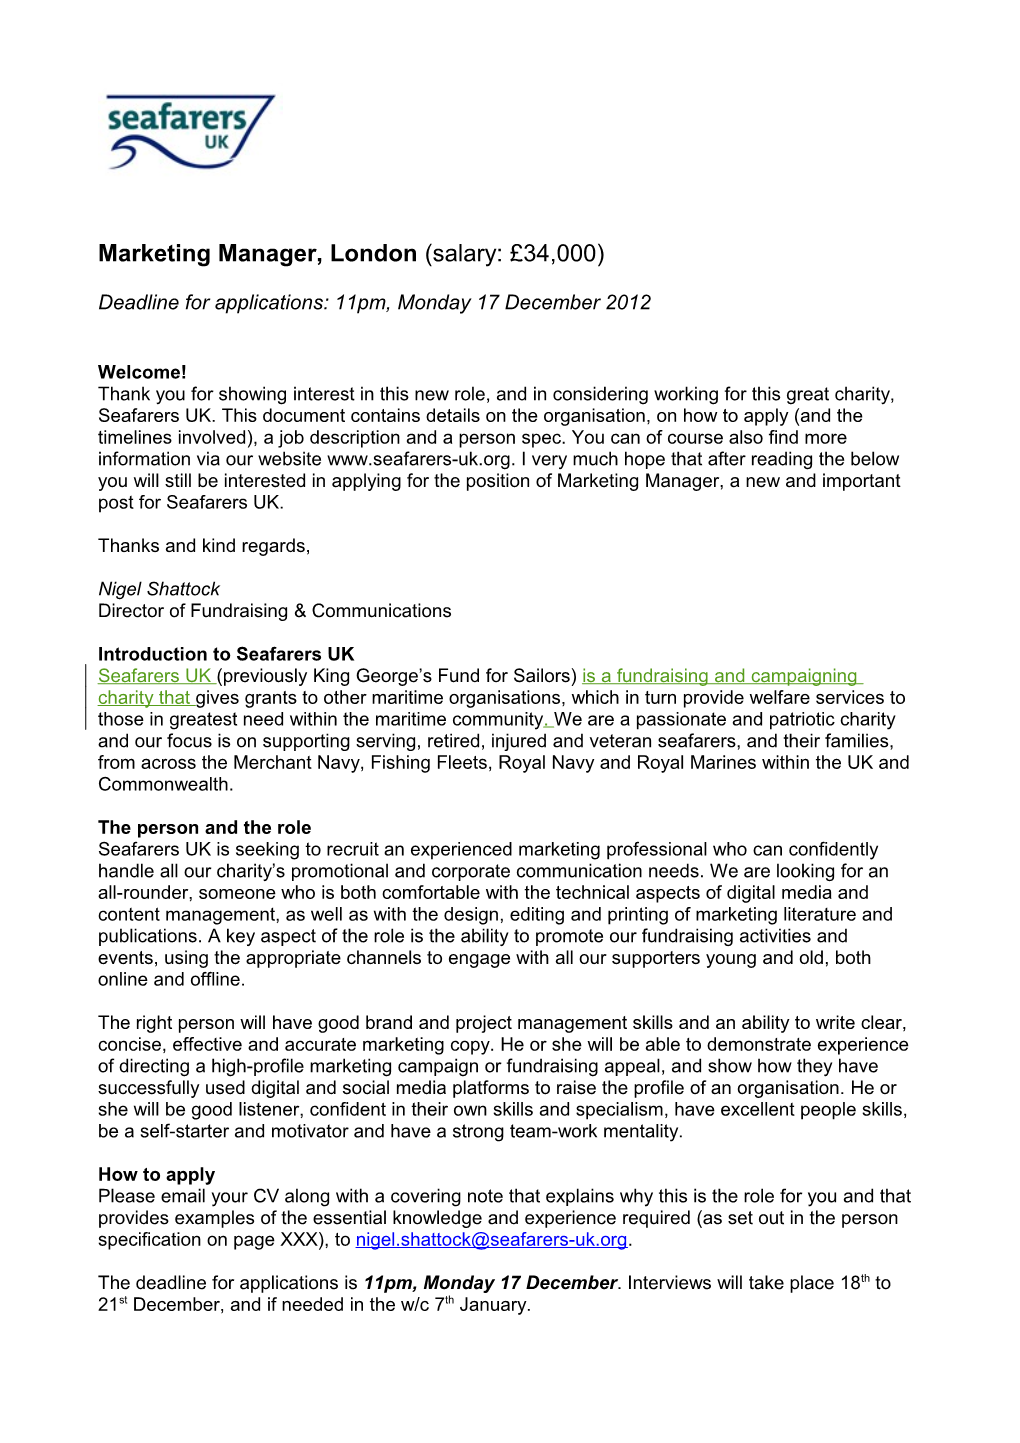 Marketing Manager, London (Salary: 34,000)